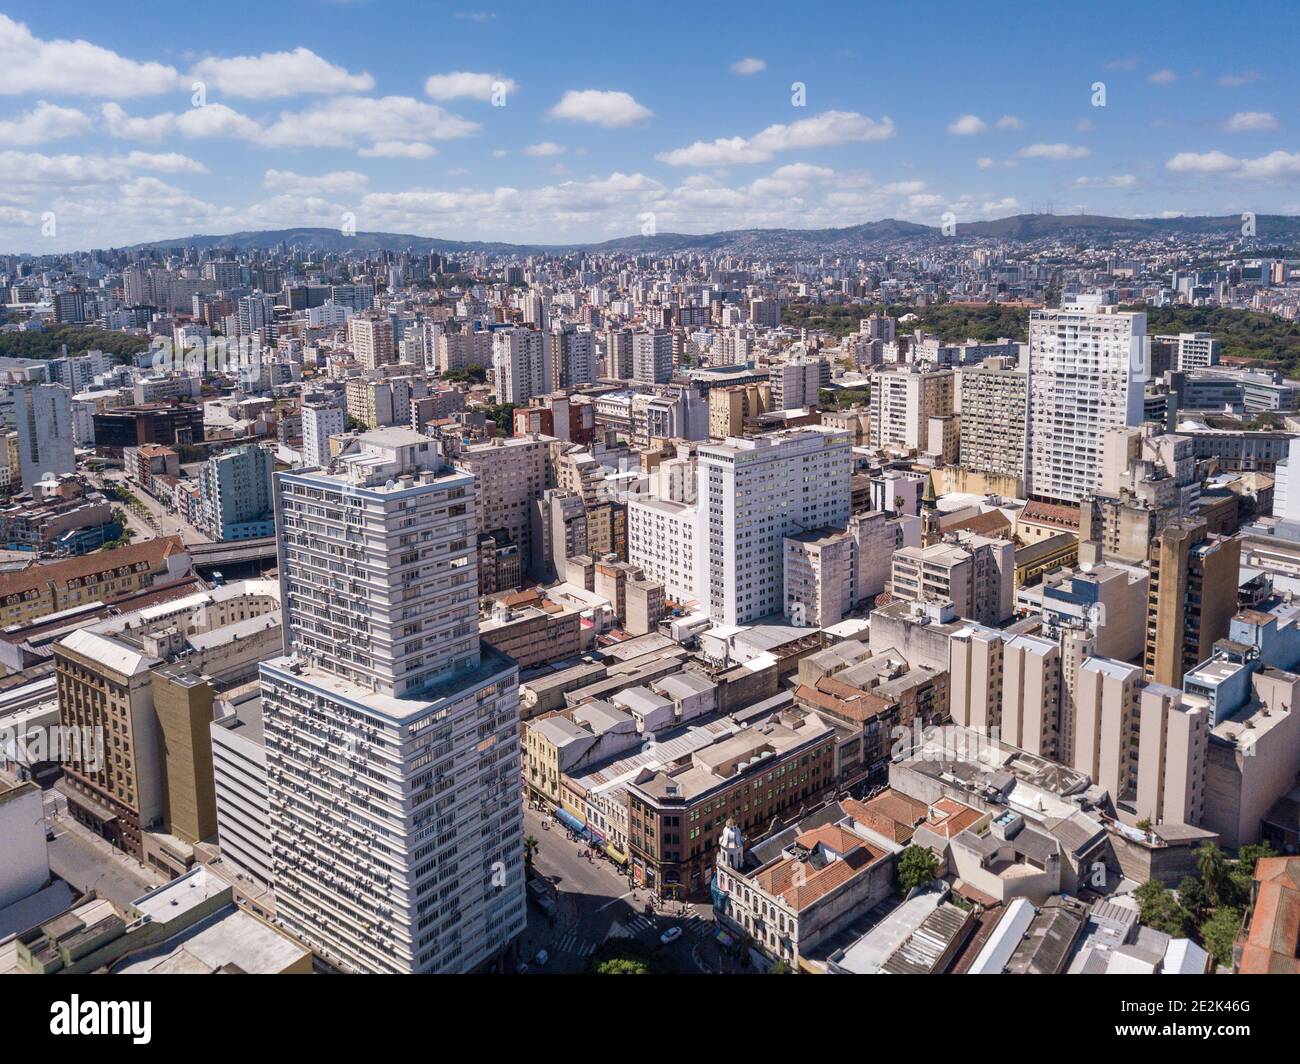 Porto Alegre Images – Browse 4,250 Stock Photos, Vectors, and